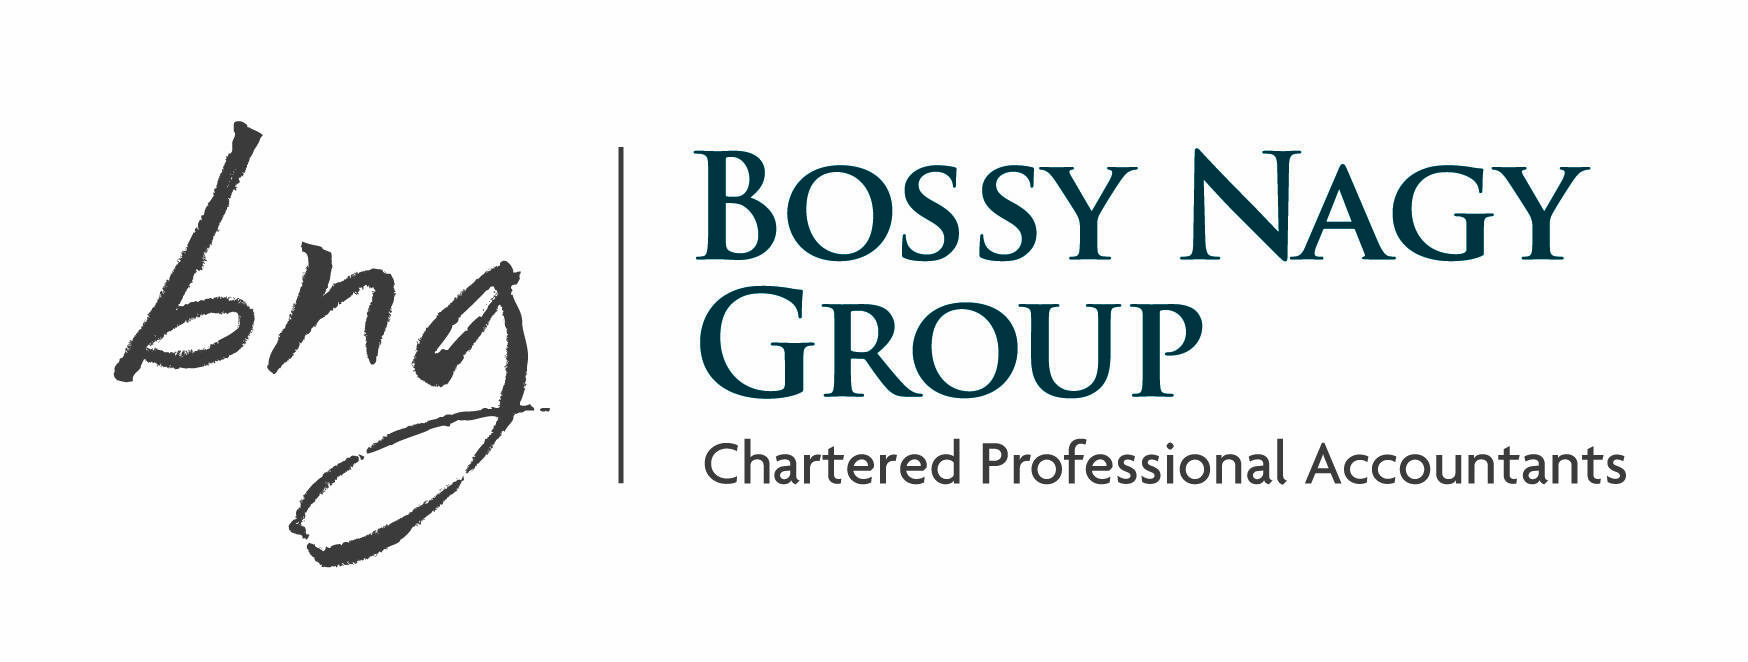 Bossy Nagy Group CPA